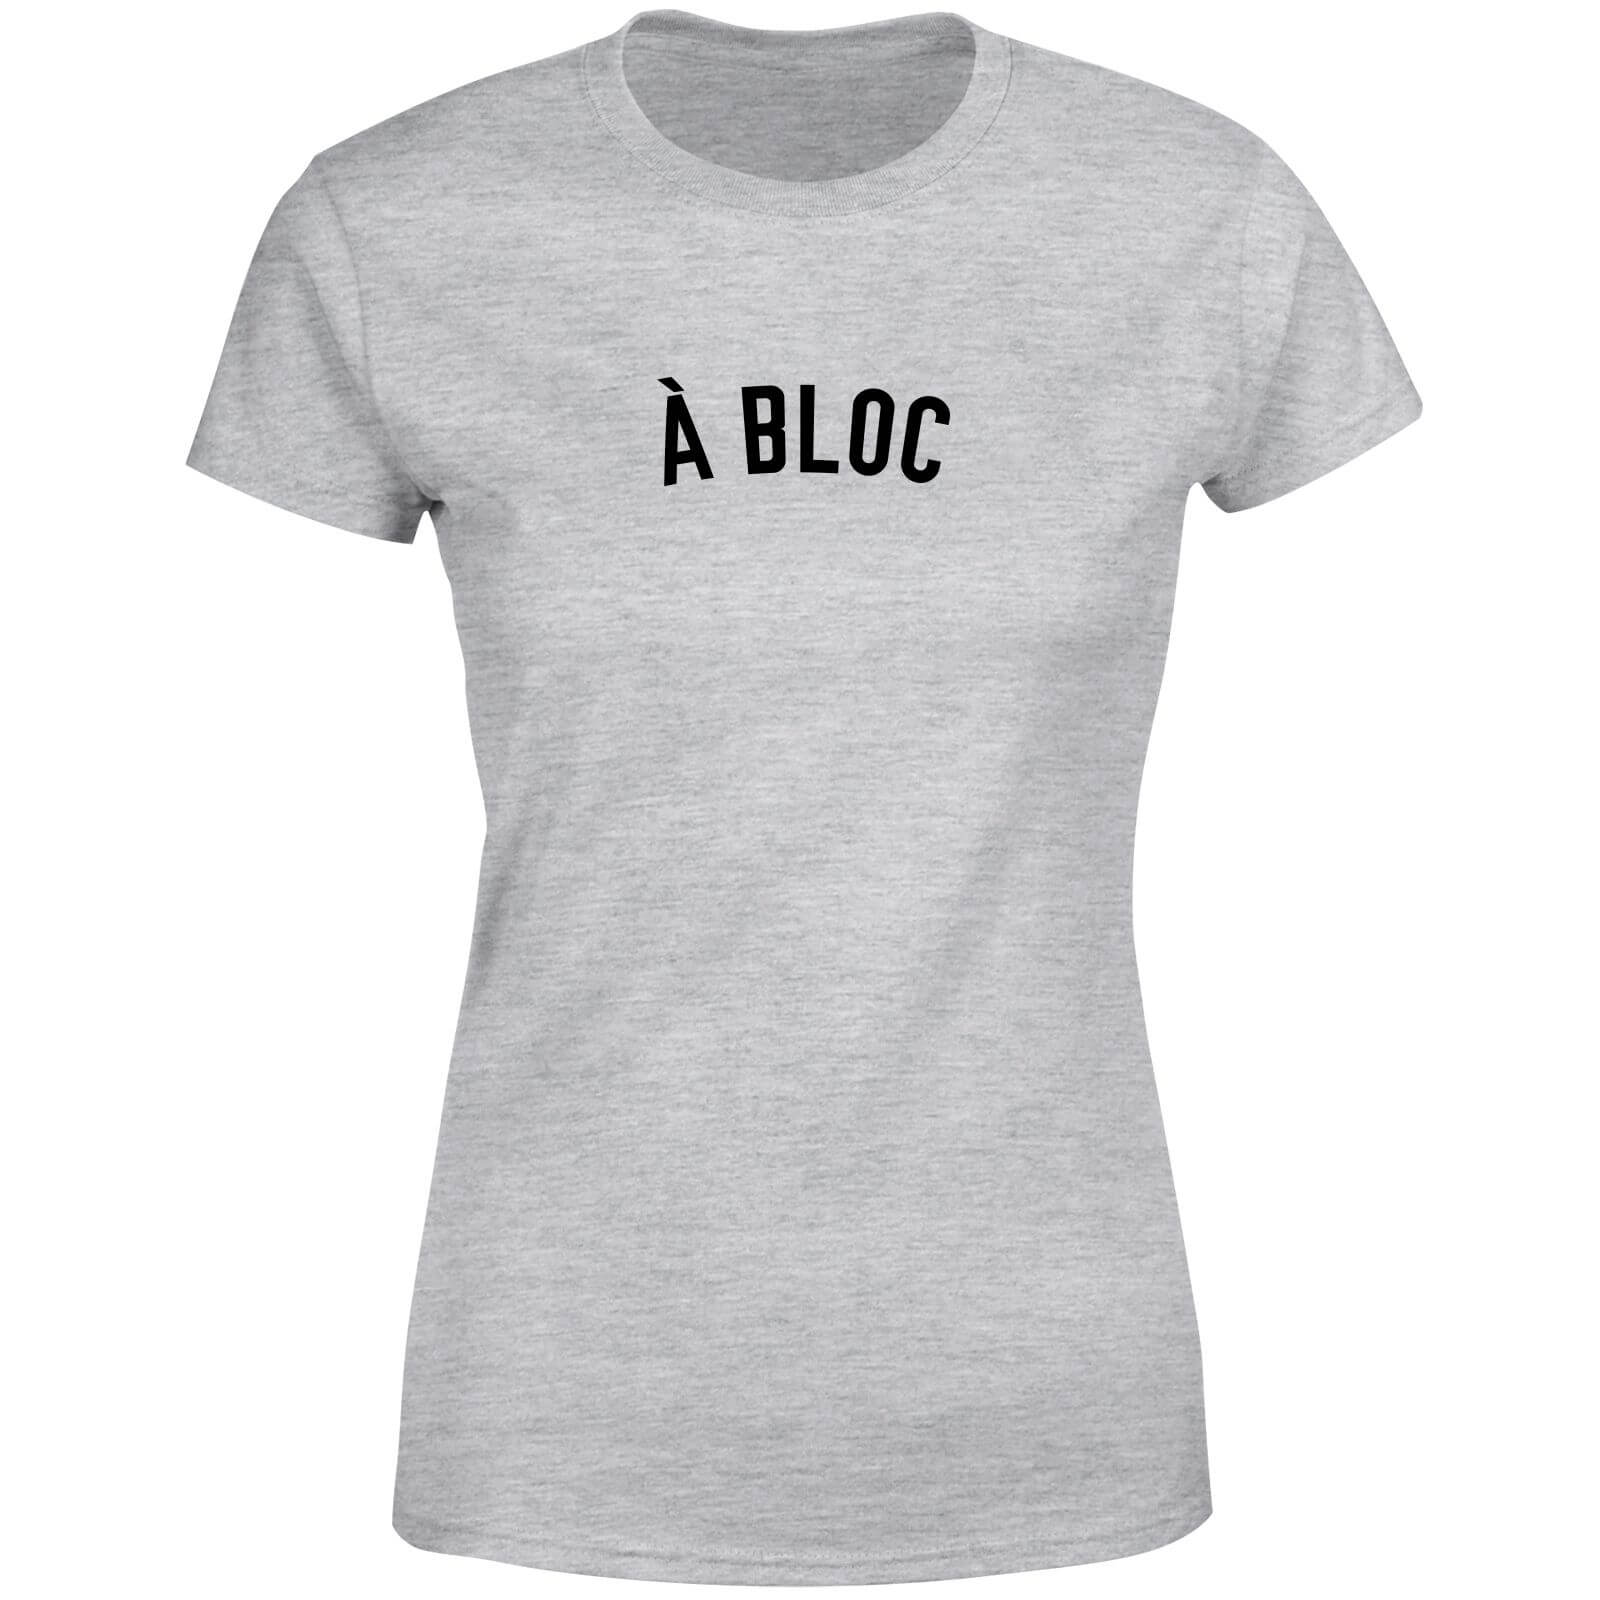 A Bloc Women's T-Shirt - Grey - M - Grey